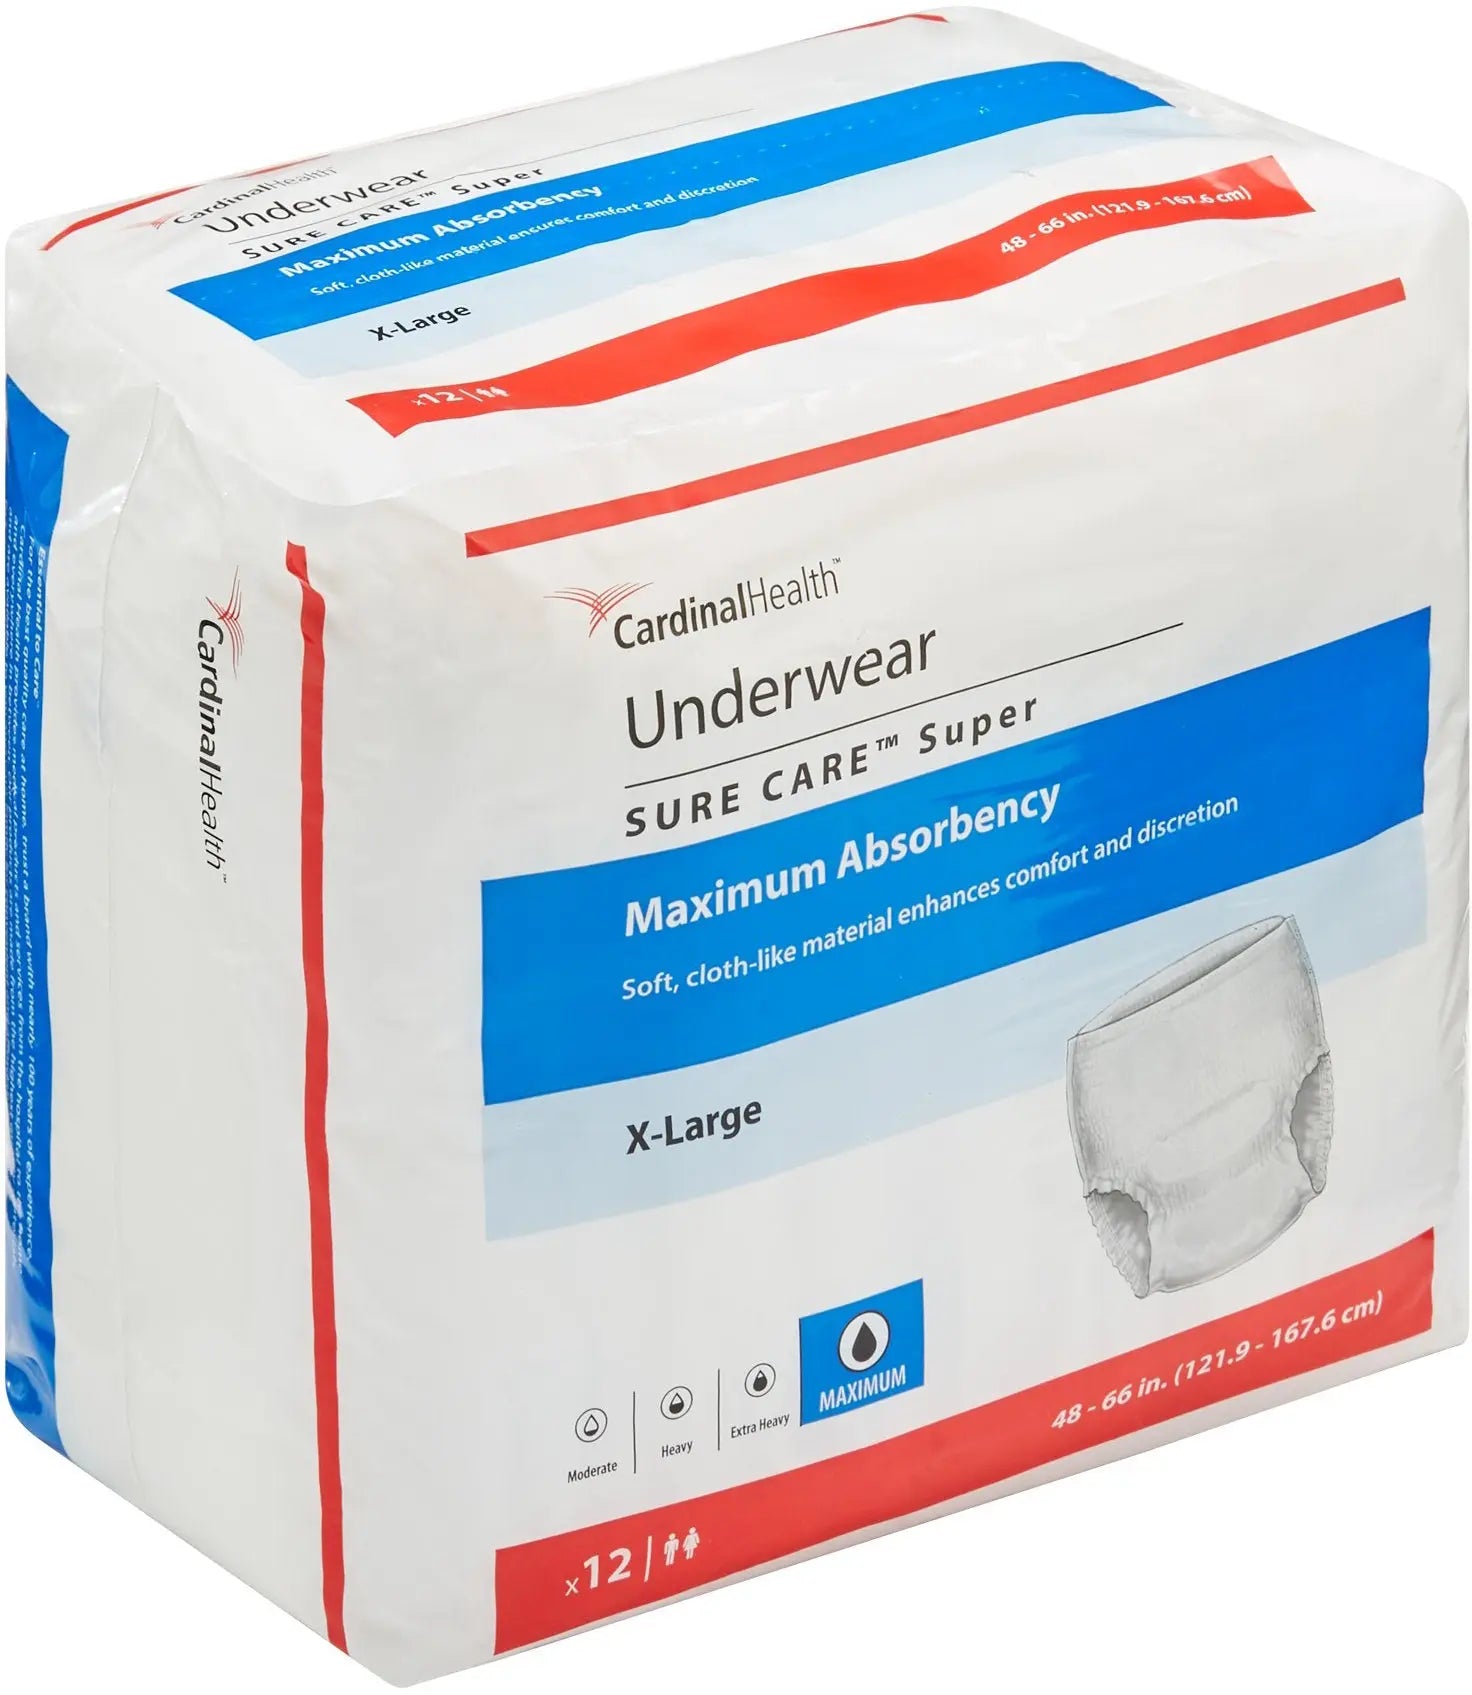 Buy Sure Care Plus Select Protective Underwear: Heavy Absorbency